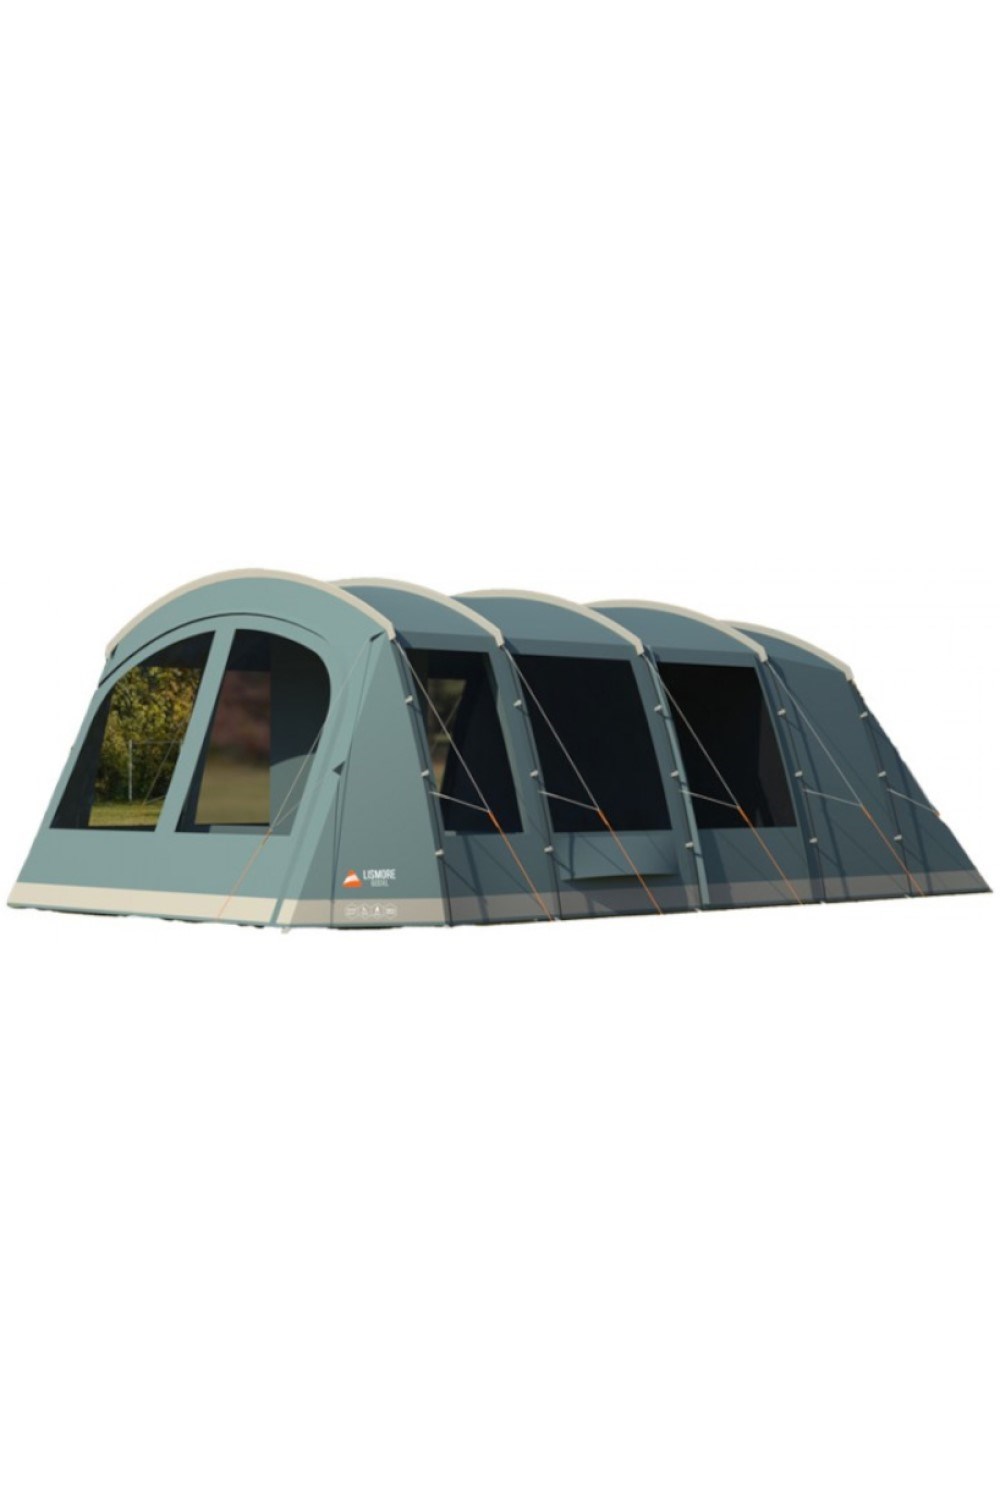 Lismore 600xl 6 Man Tent -